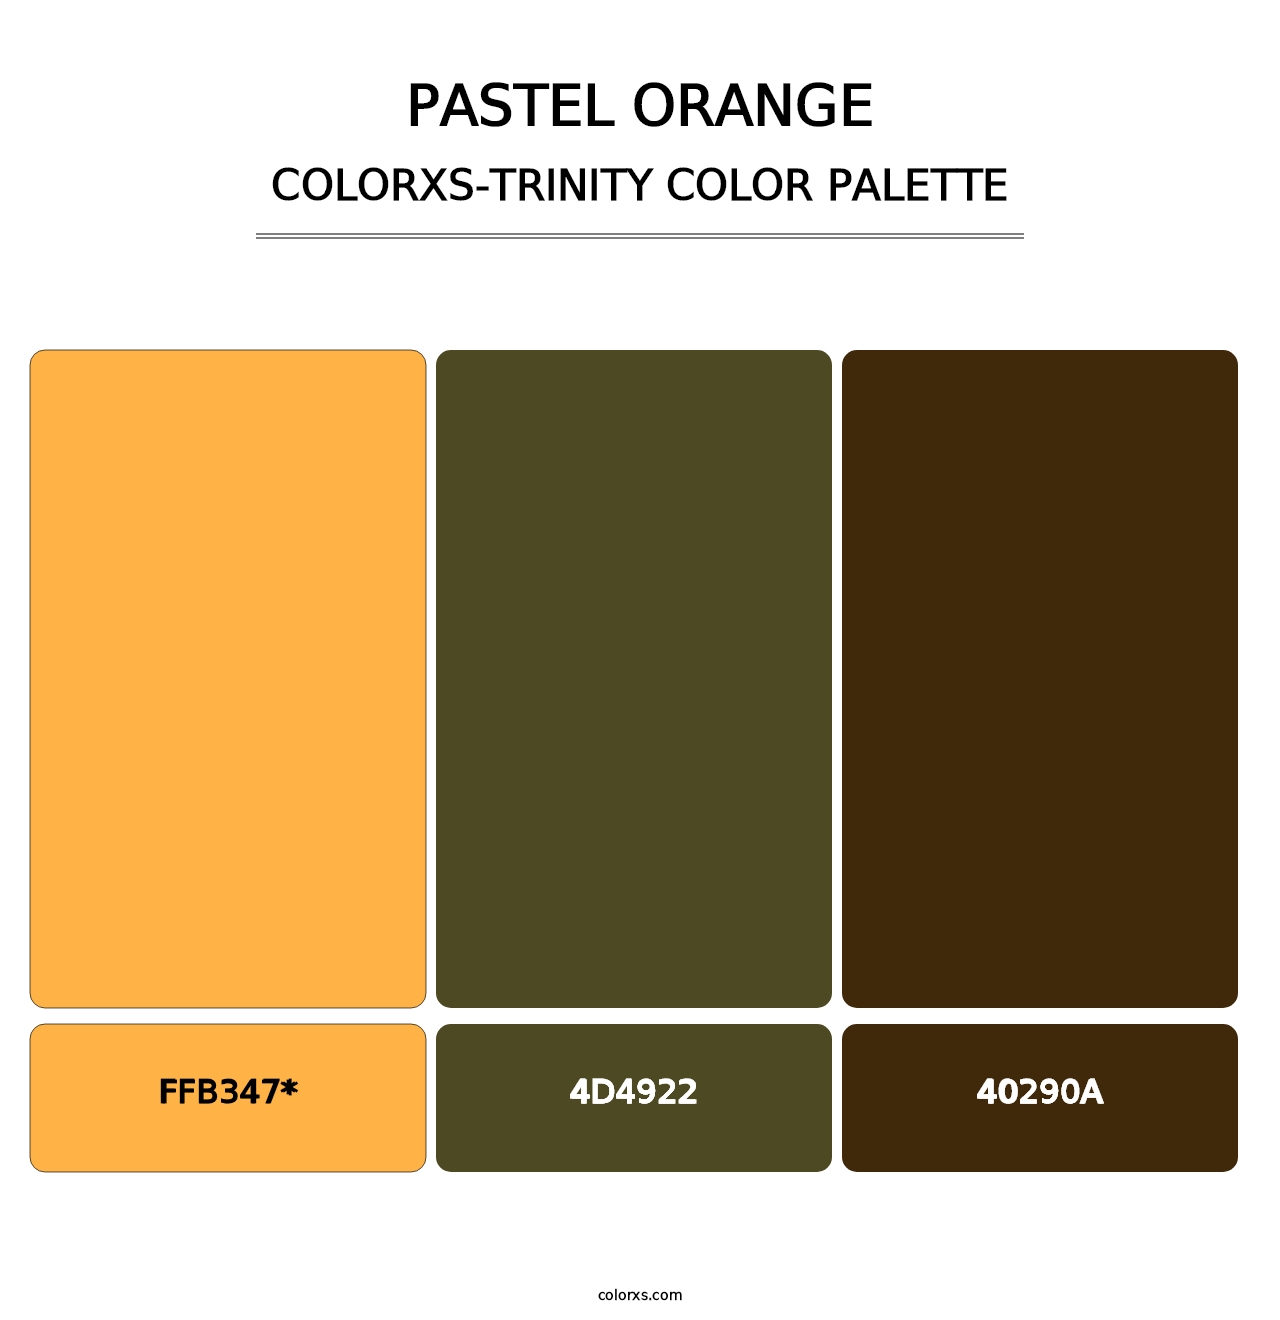 Pastel Orange - Colorxs Trinity Palette